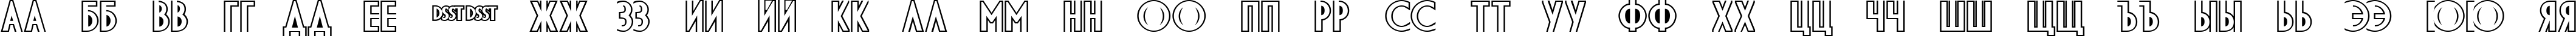 Пример написания русского алфавита шрифтом DS Diploma-DBL Bold